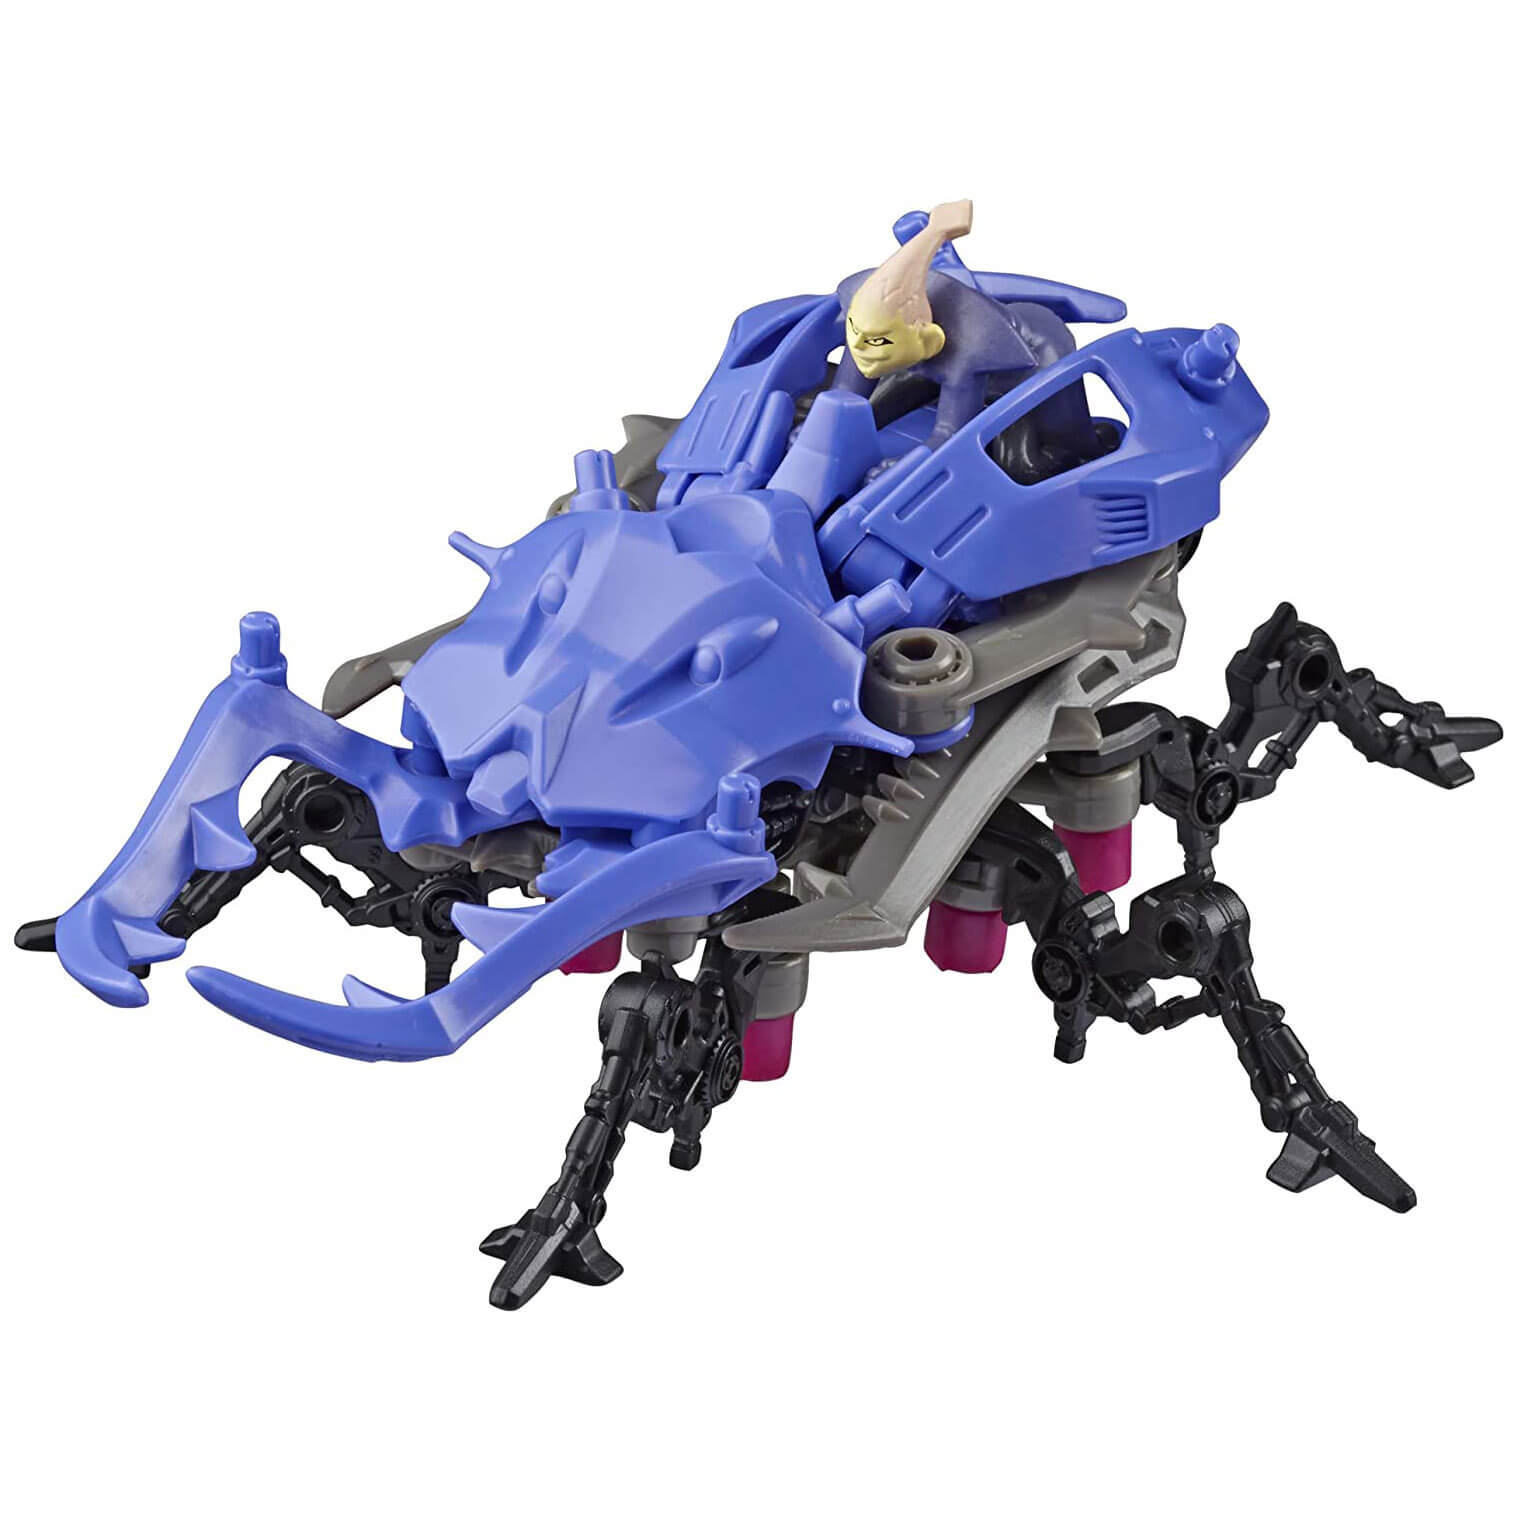 Zoids Mega Battlers Pincers Beetle-Type Buildable Beast Figure